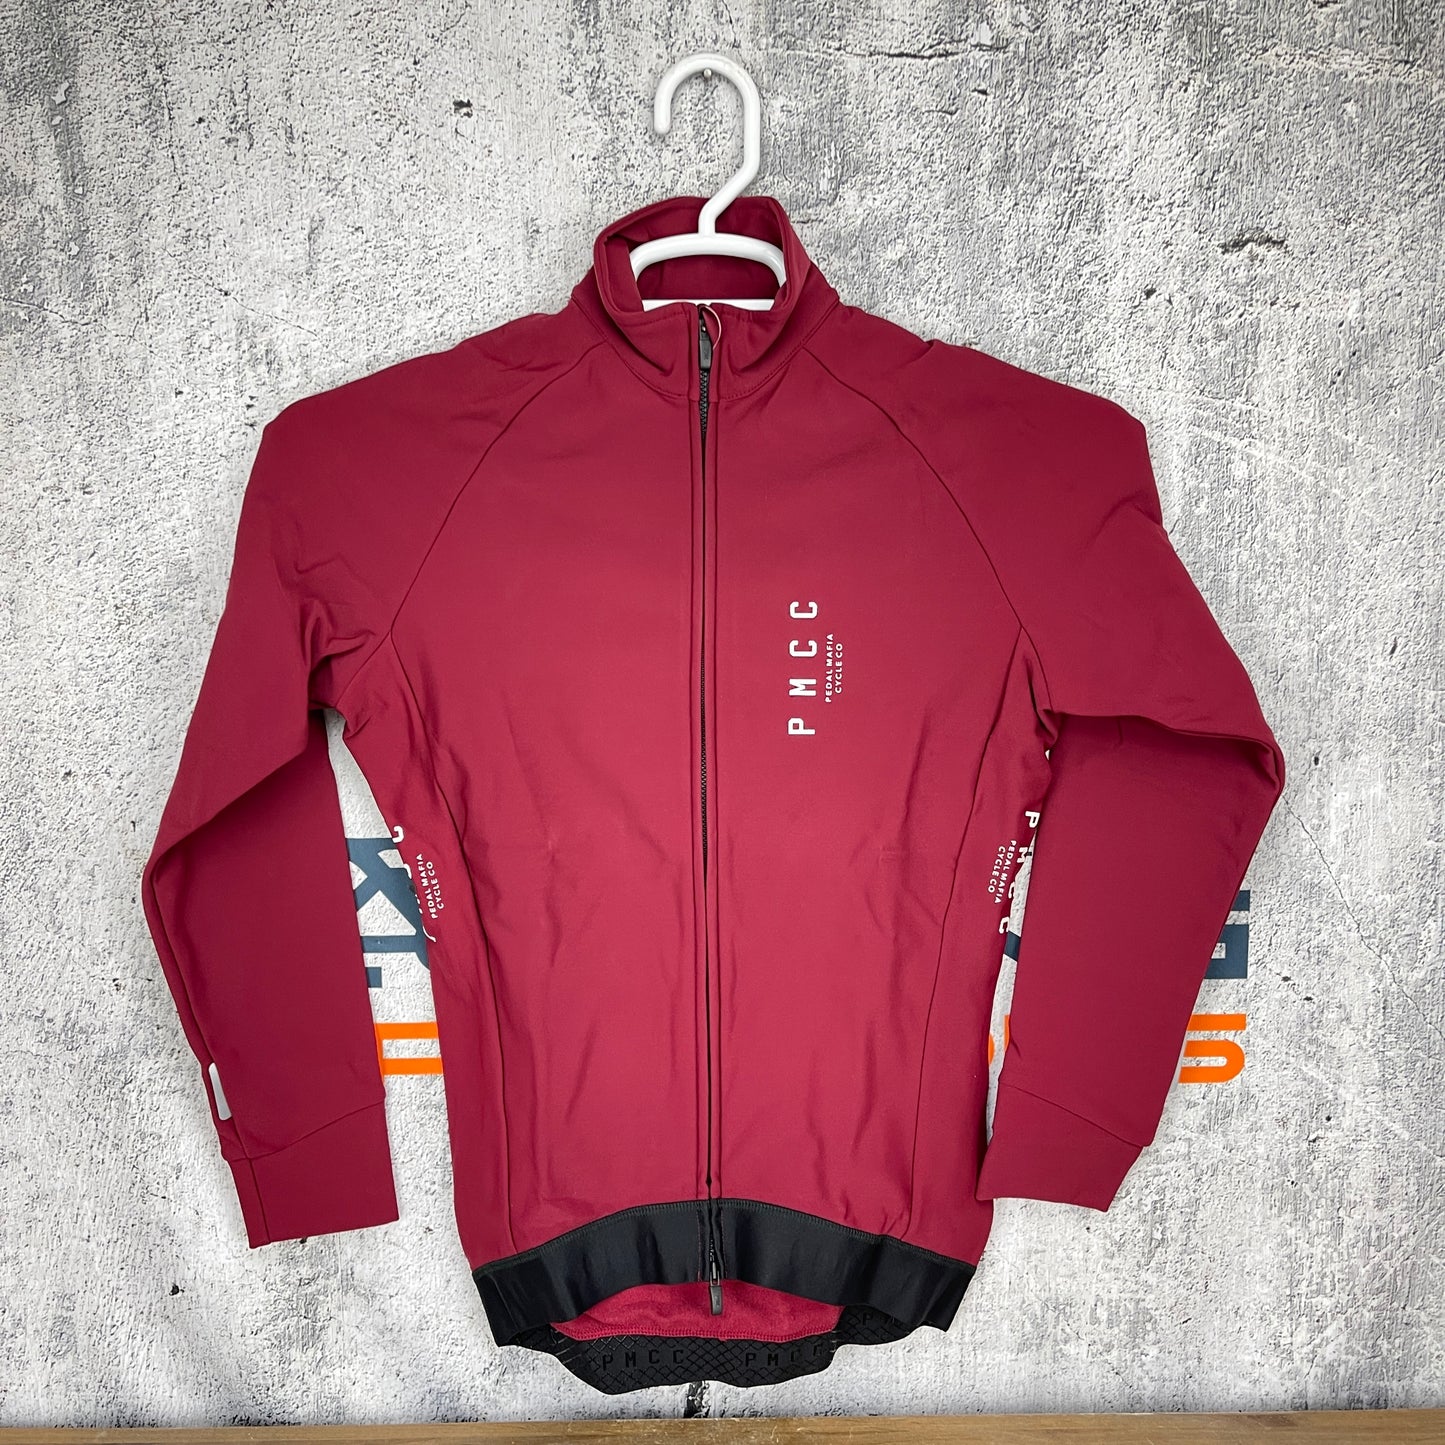 New! Pedal Mafia PMCC Thermal Long Sleeve Men's Small Cycling Jacket Burgundy